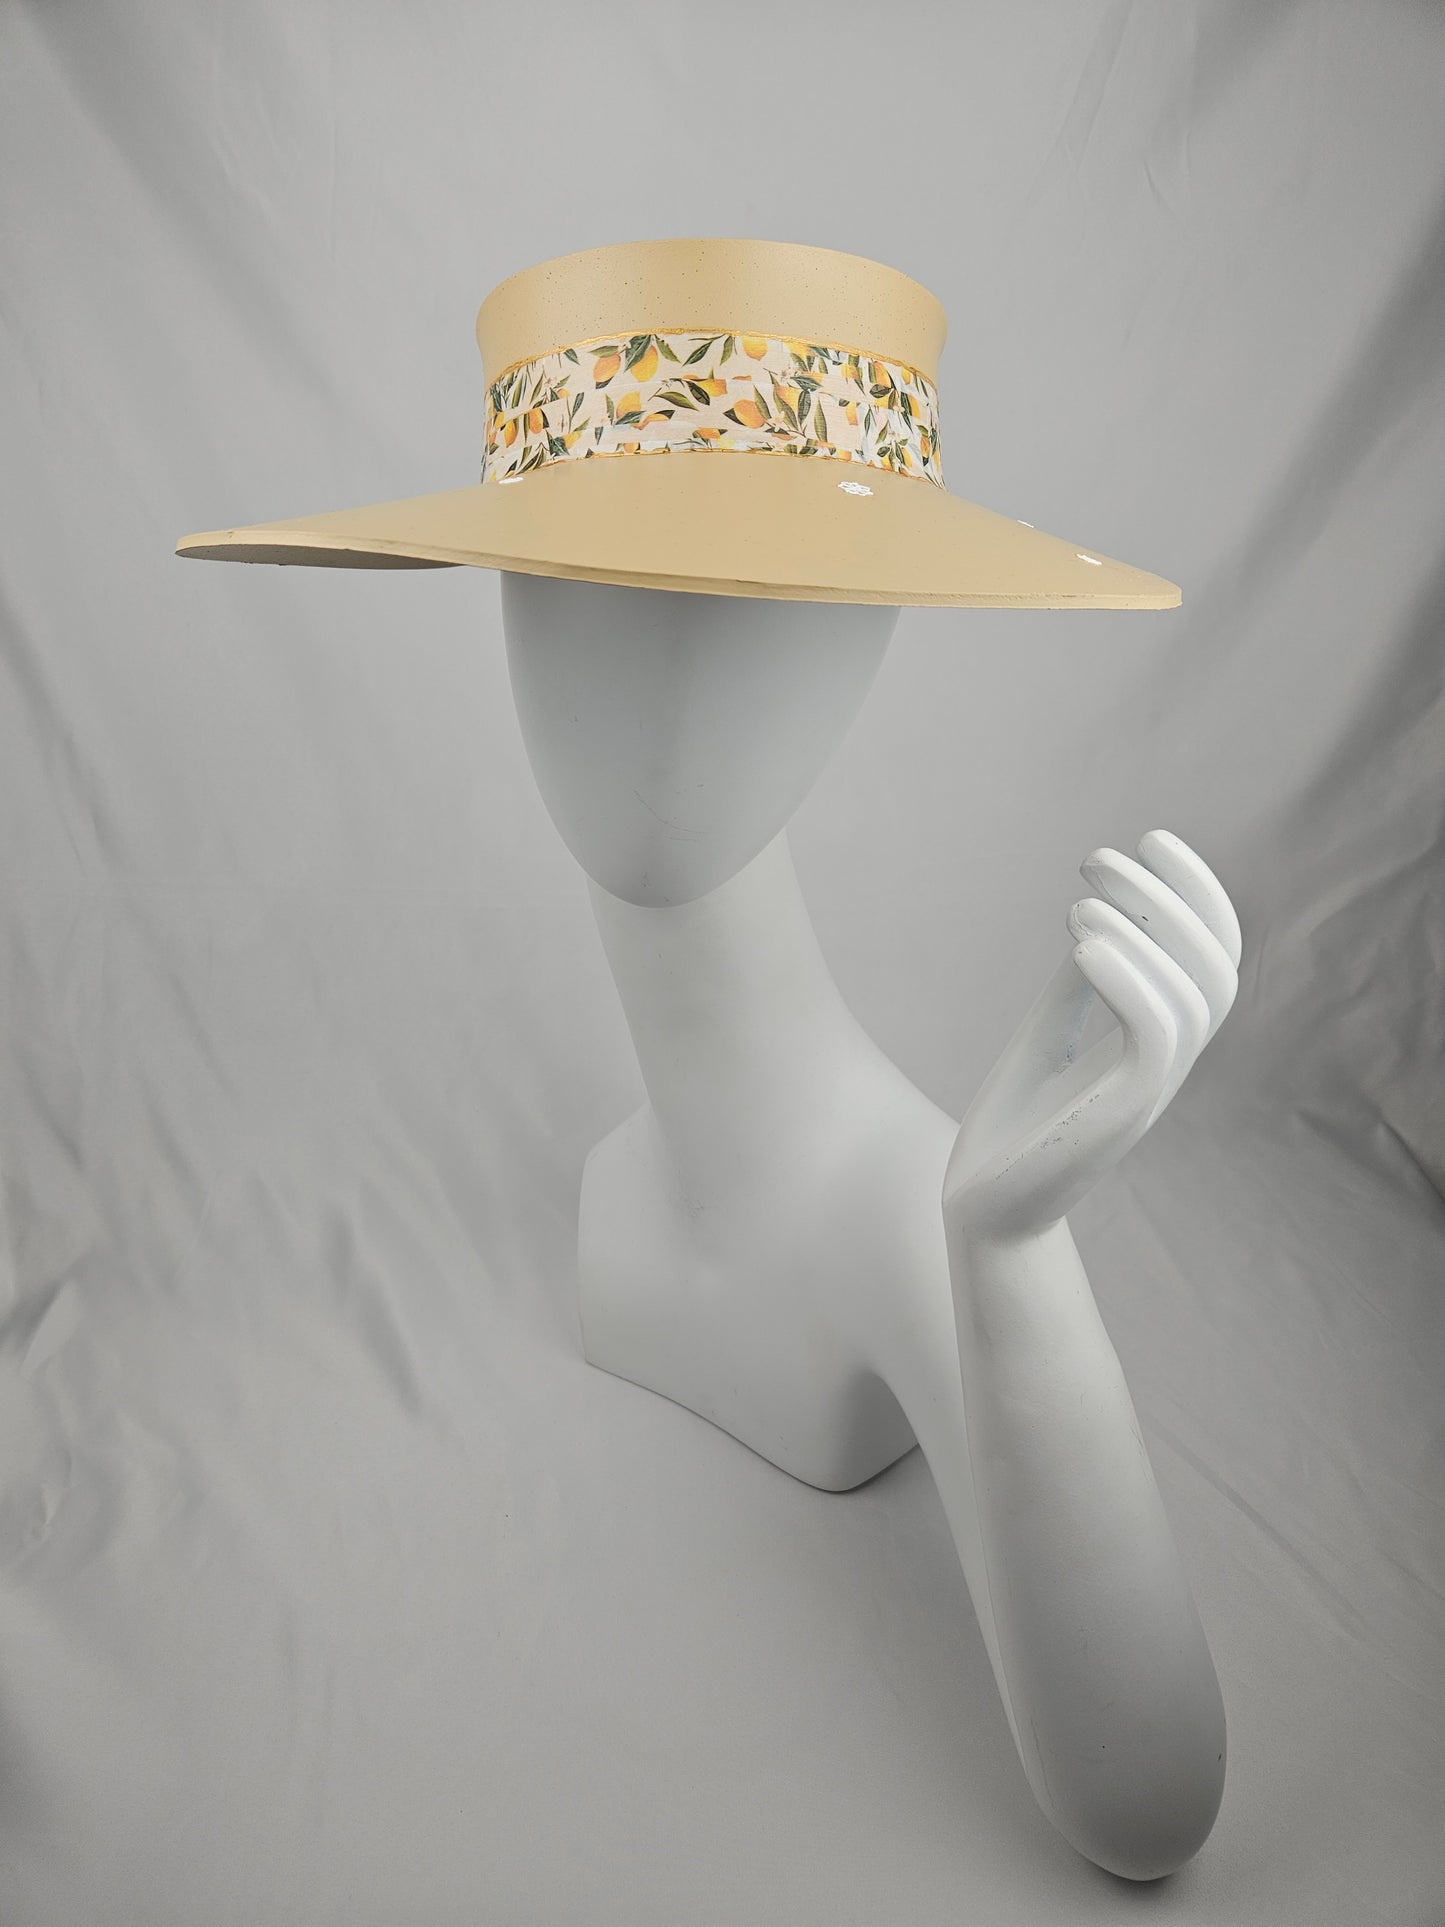 Beautiful Beige Audrey Foam Sun Visor Hat with Fun Citrus Floral Band and White Flowers on Brim: 1950s, Walks, Brunch, Tea, Golf, Wedding, Church, No Headache, Derby